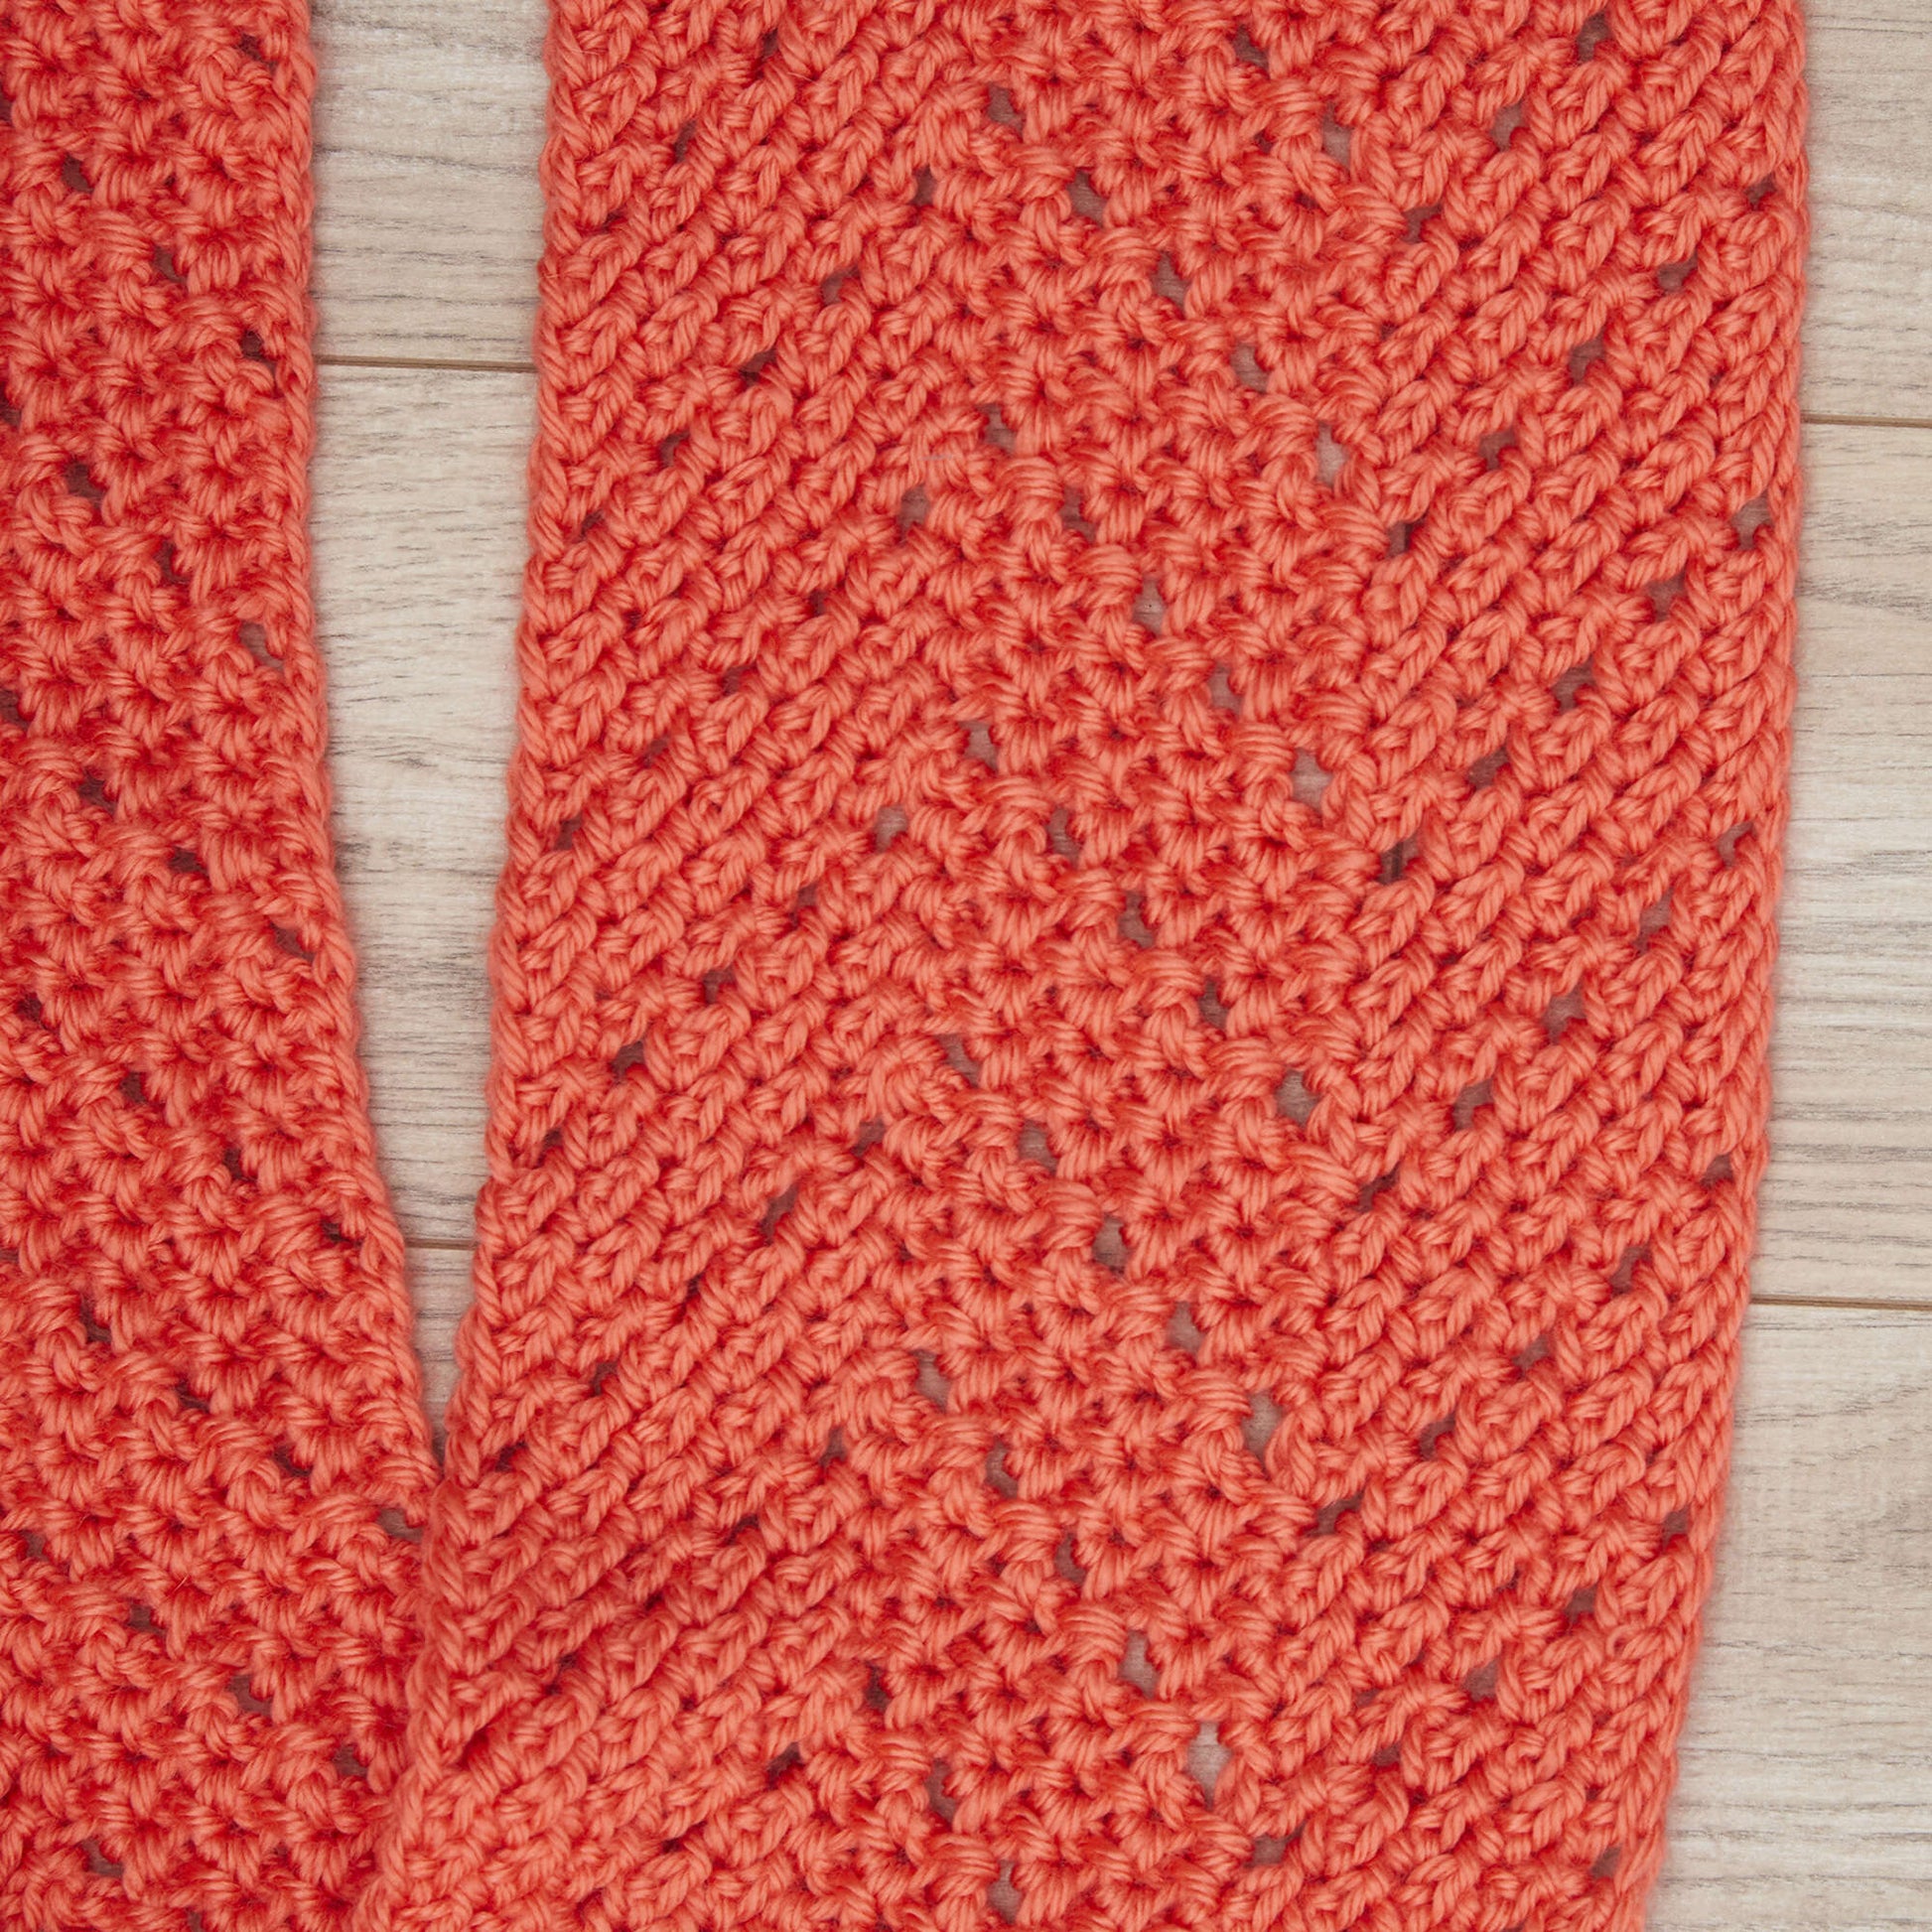 Free Red Heart Crochet Chevron Herringbone Cowl Pattern